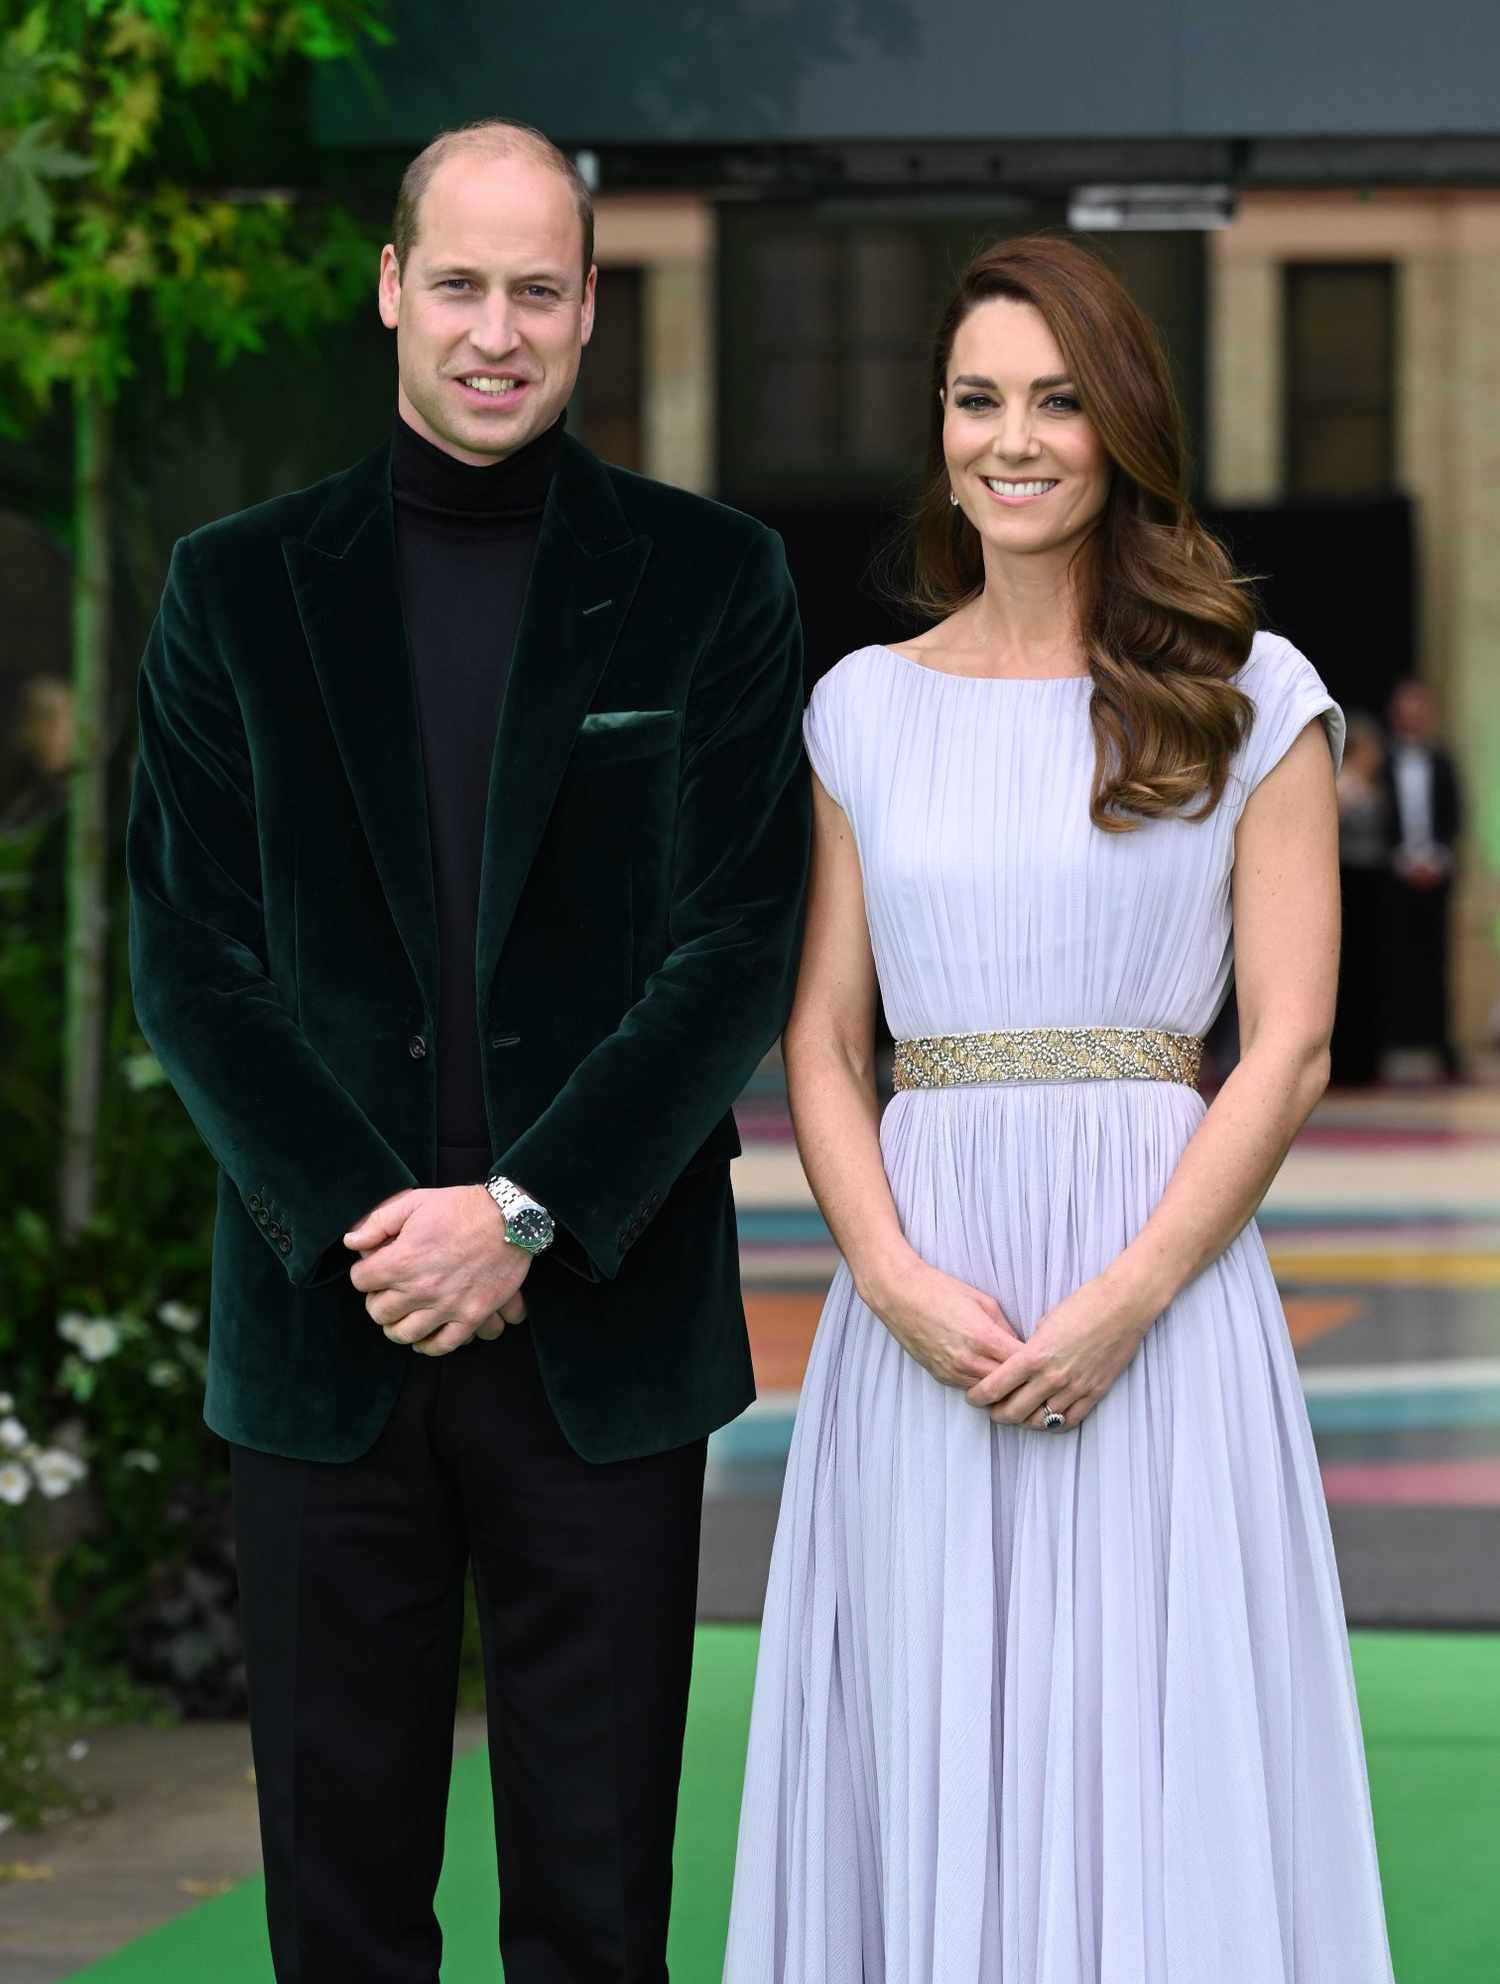 Prince William, Duke of Cambridge and Catherine, Duchess of Cambridge